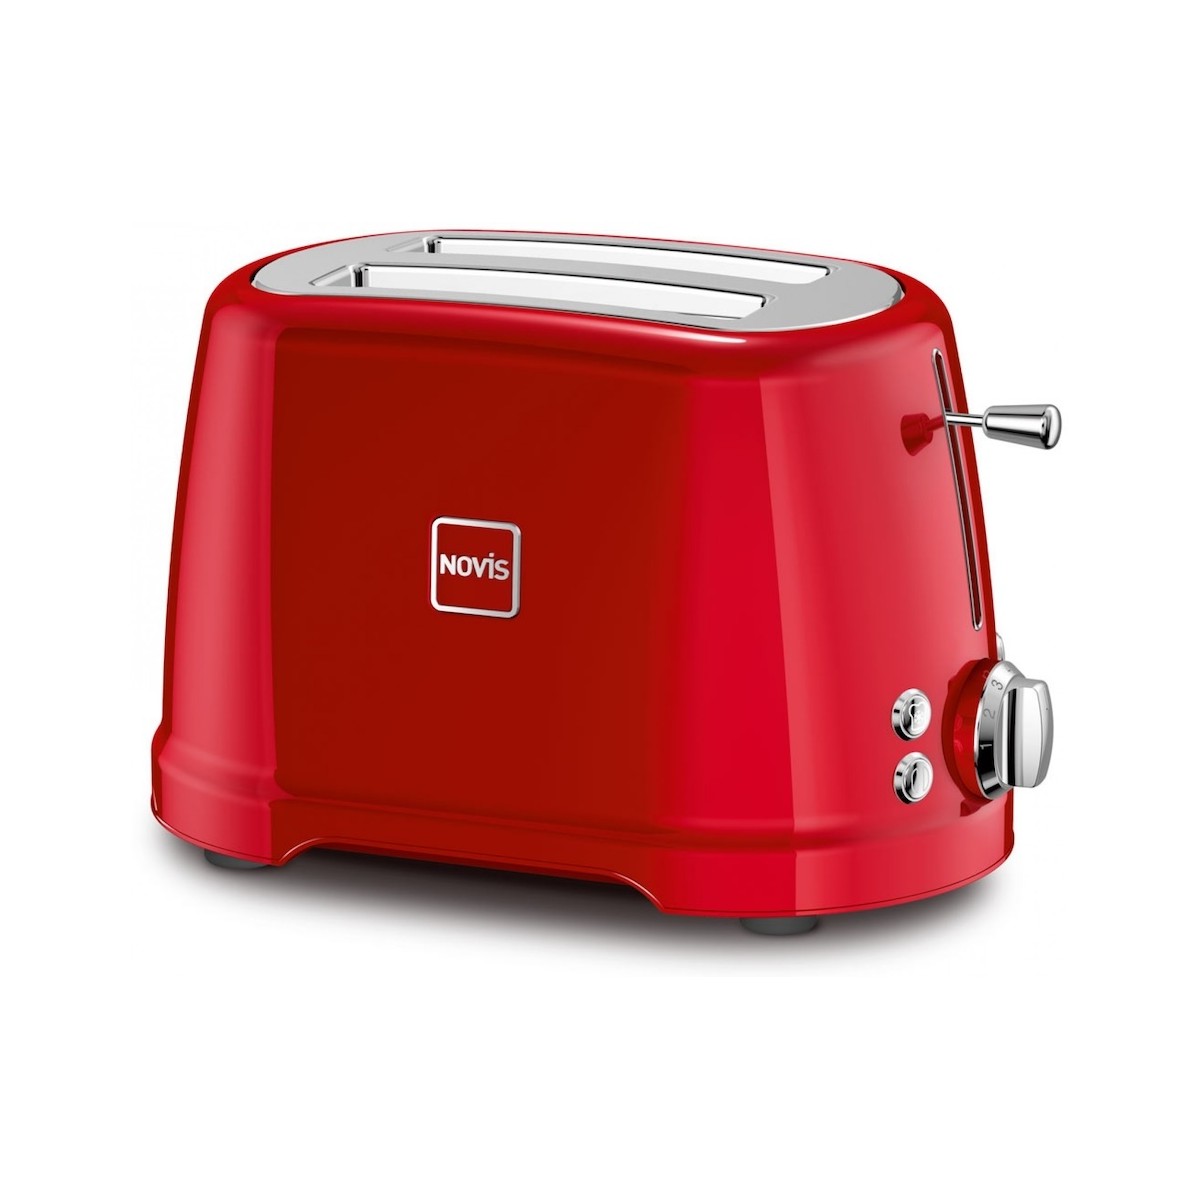 NOVIS T2 toaster - red